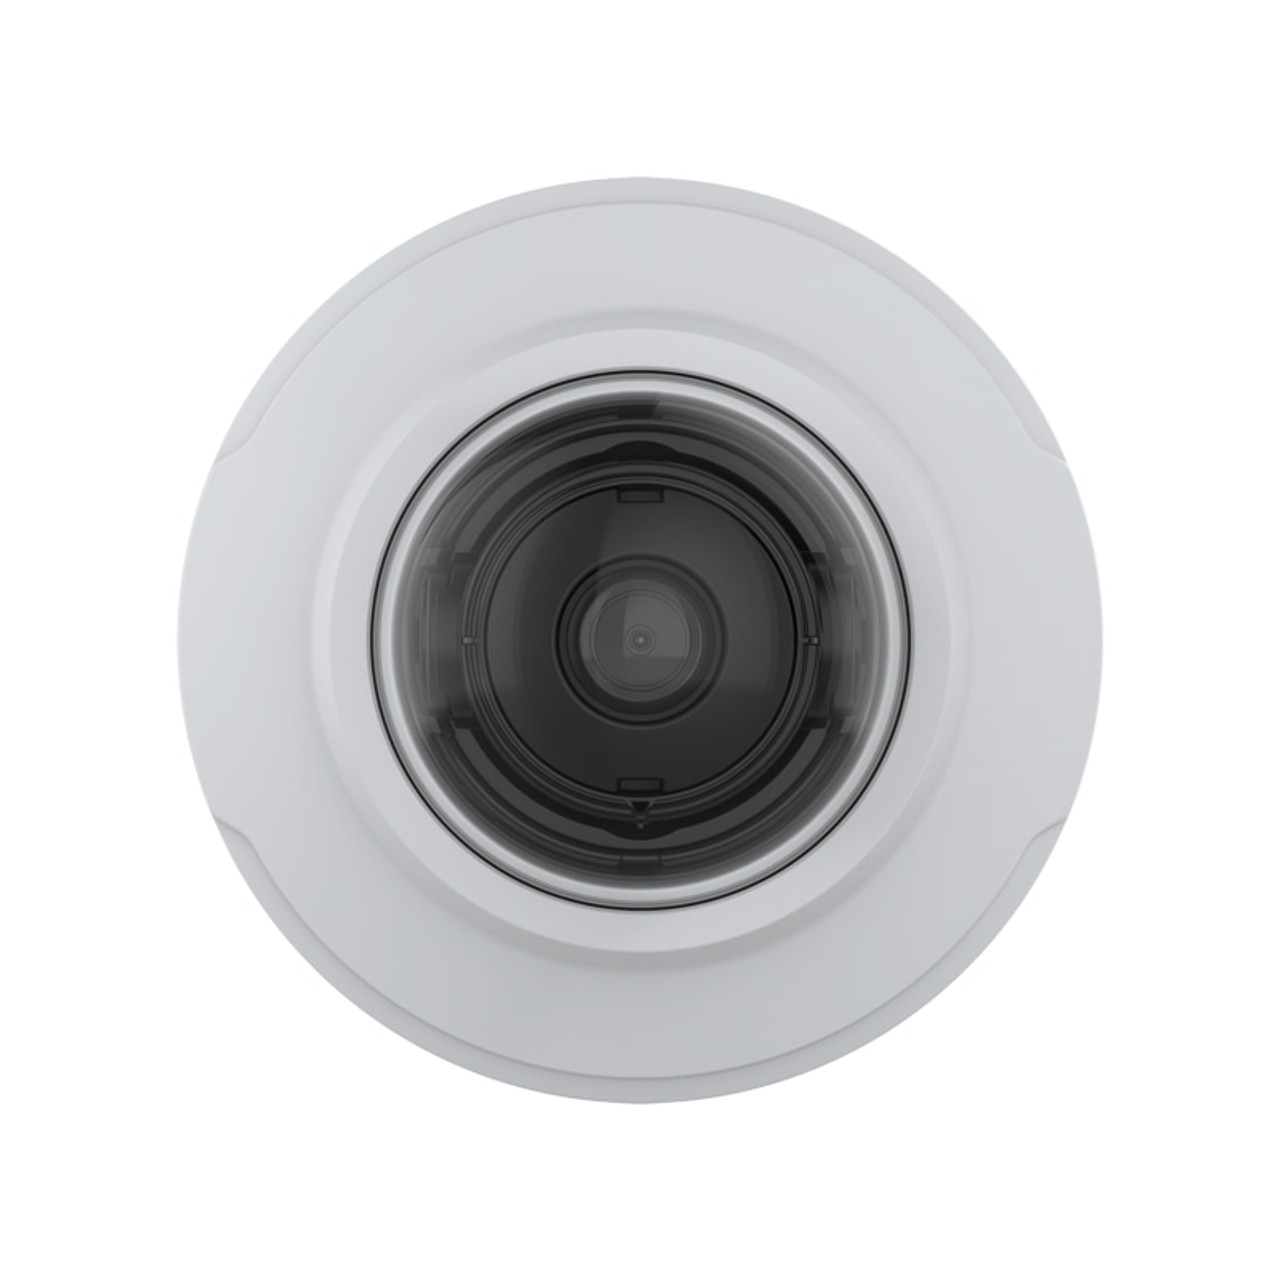 AXIS M3086-V (02374-001) Indoor IP Security Camera